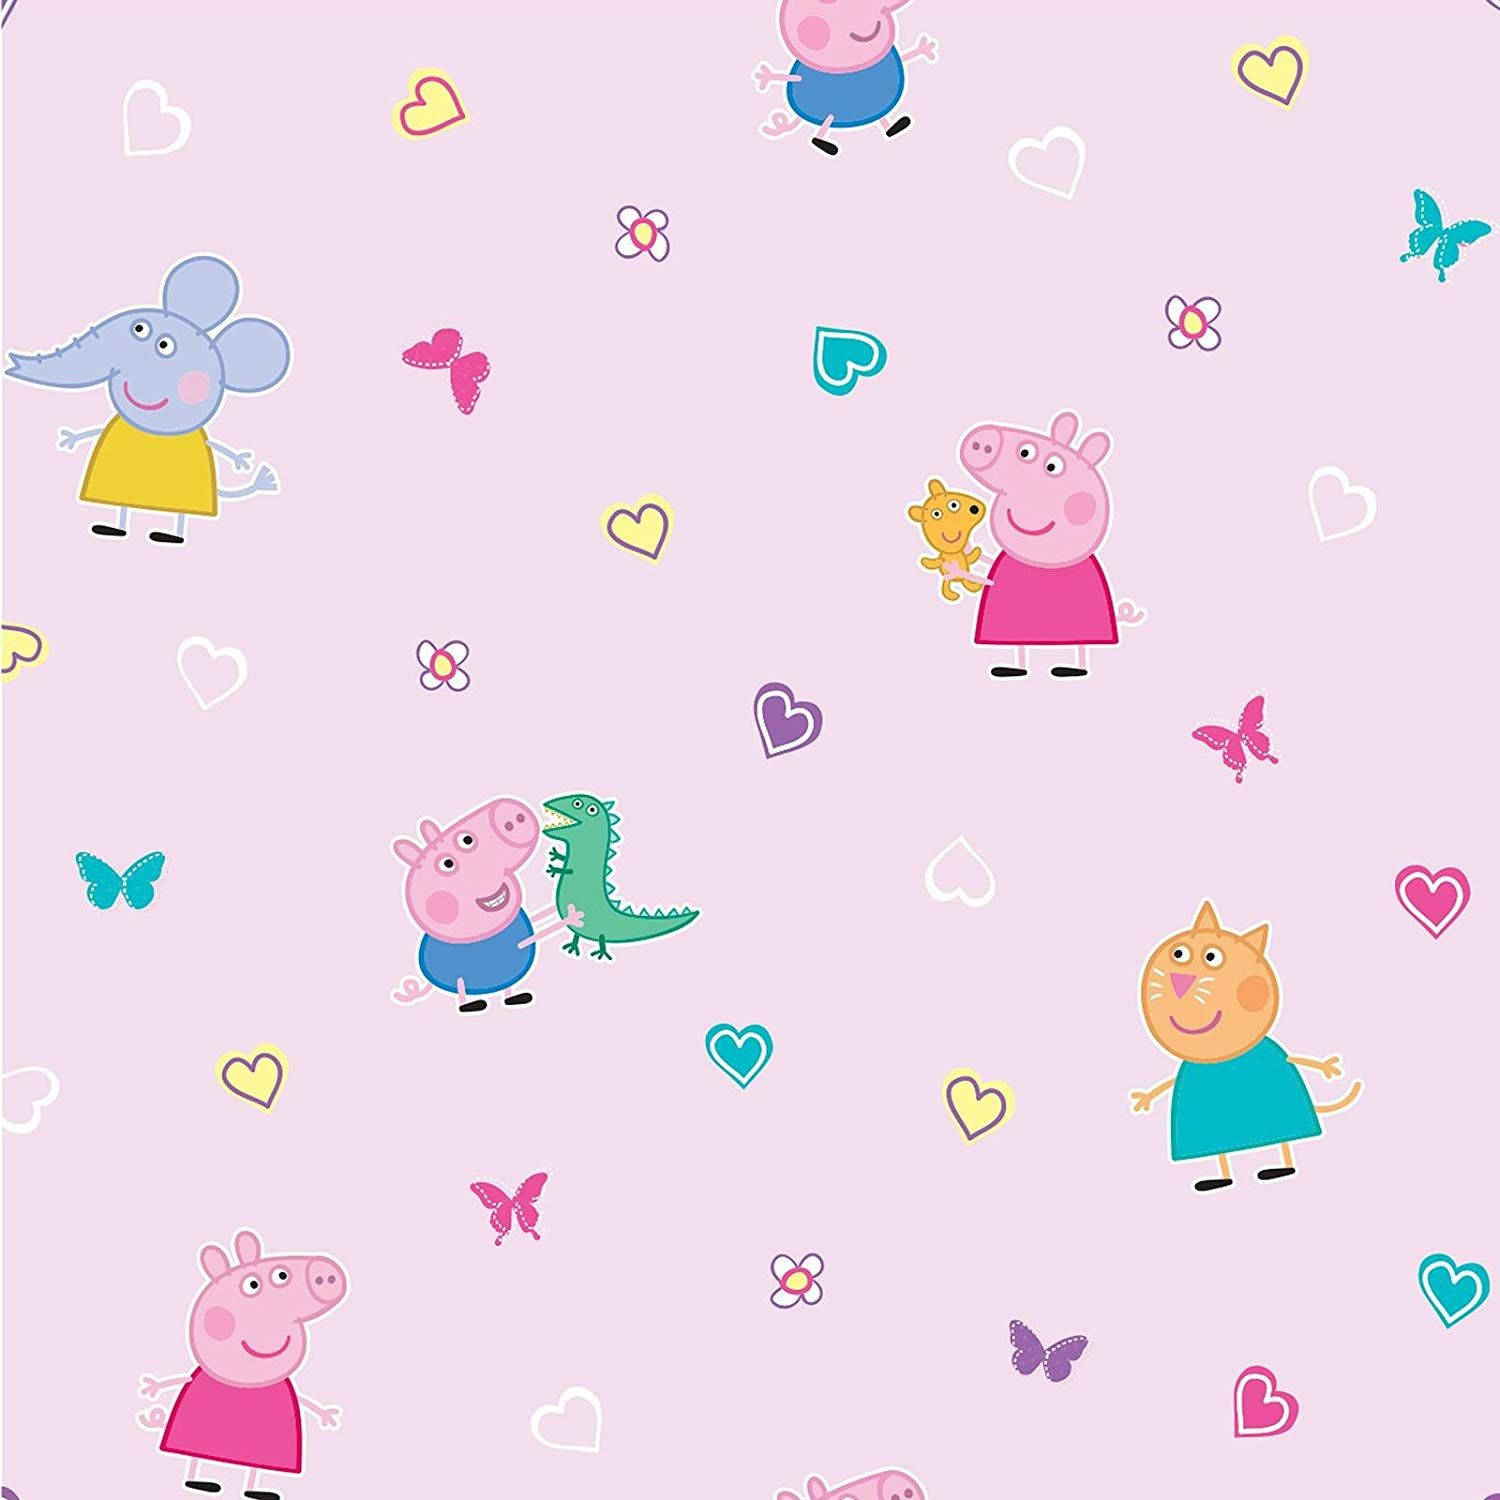 A Cheerful Peppa Pig Wallpaper